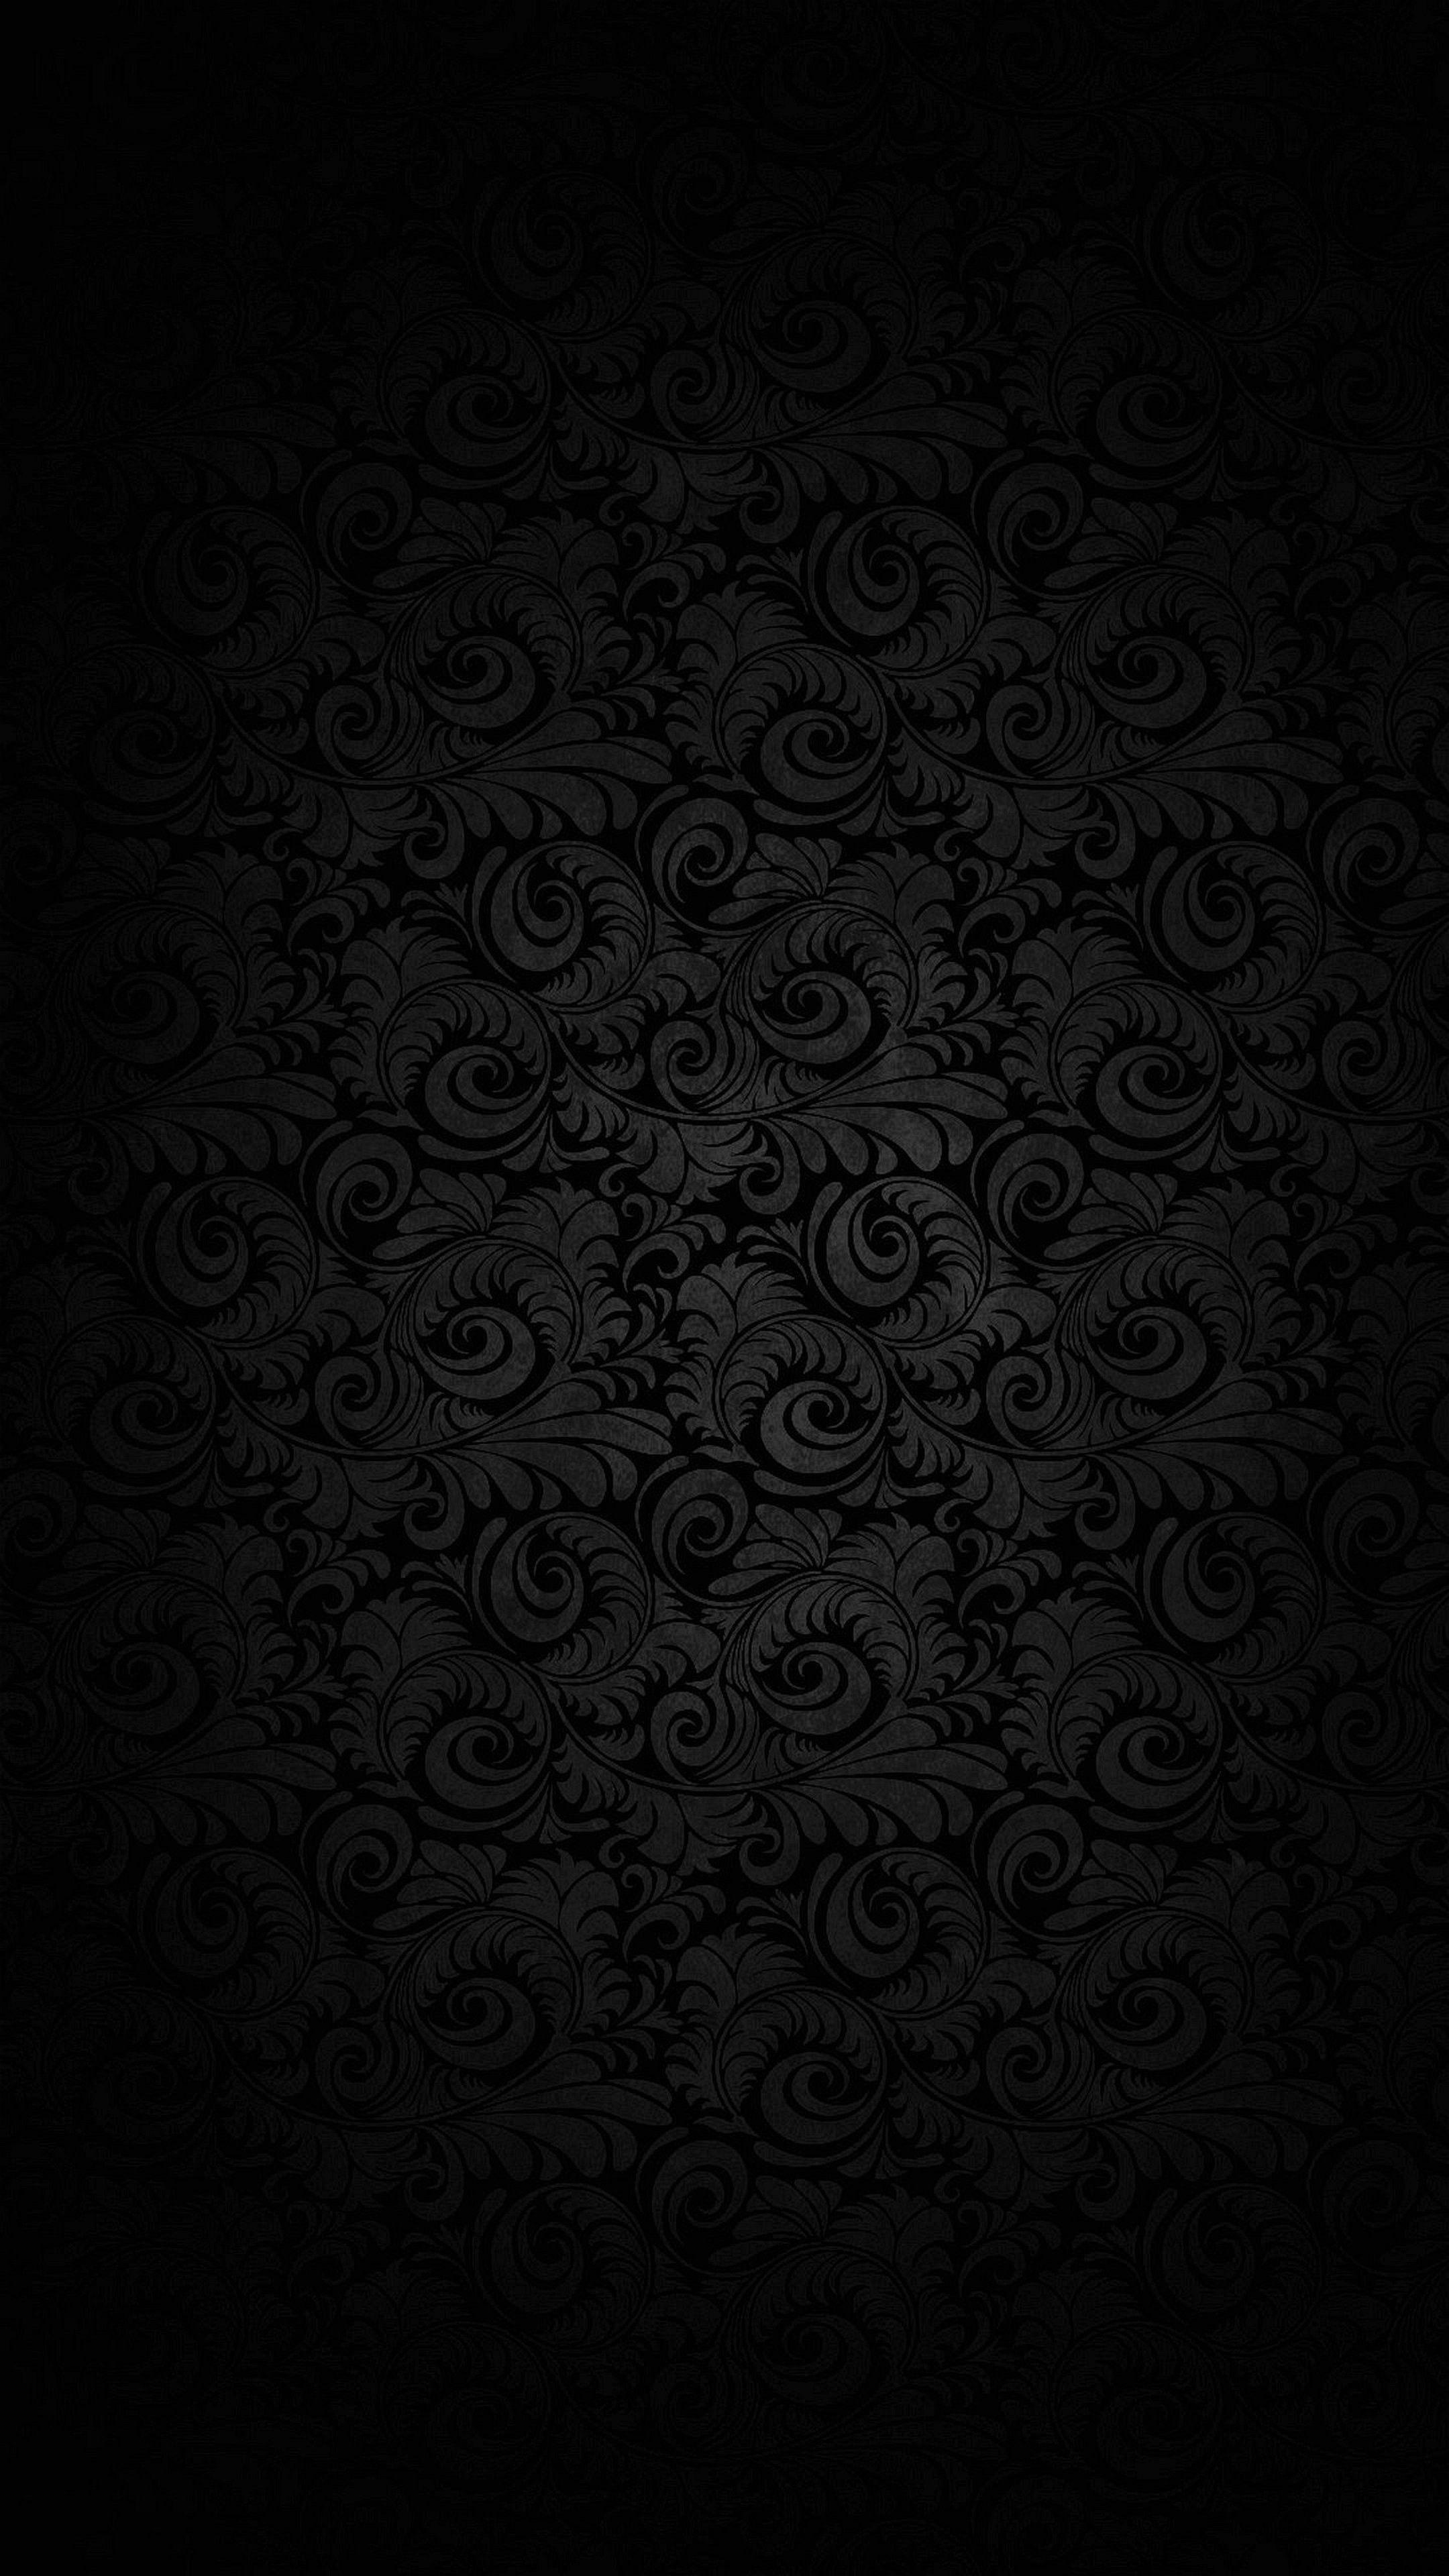 samsung black mobile wallpaper